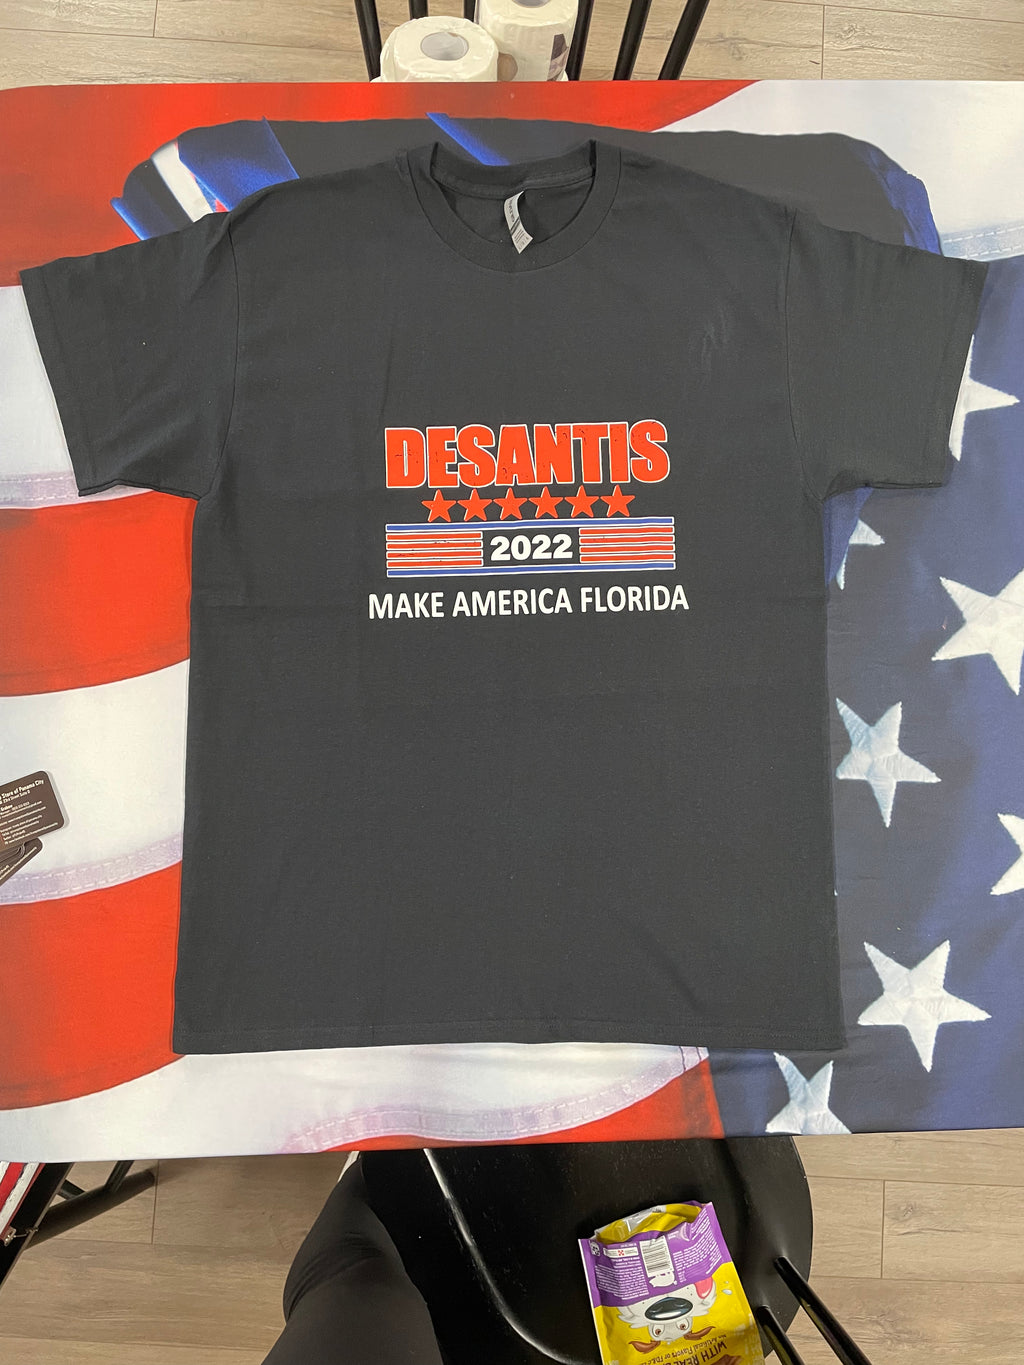 DeSantis 2022 “Make America Florida”